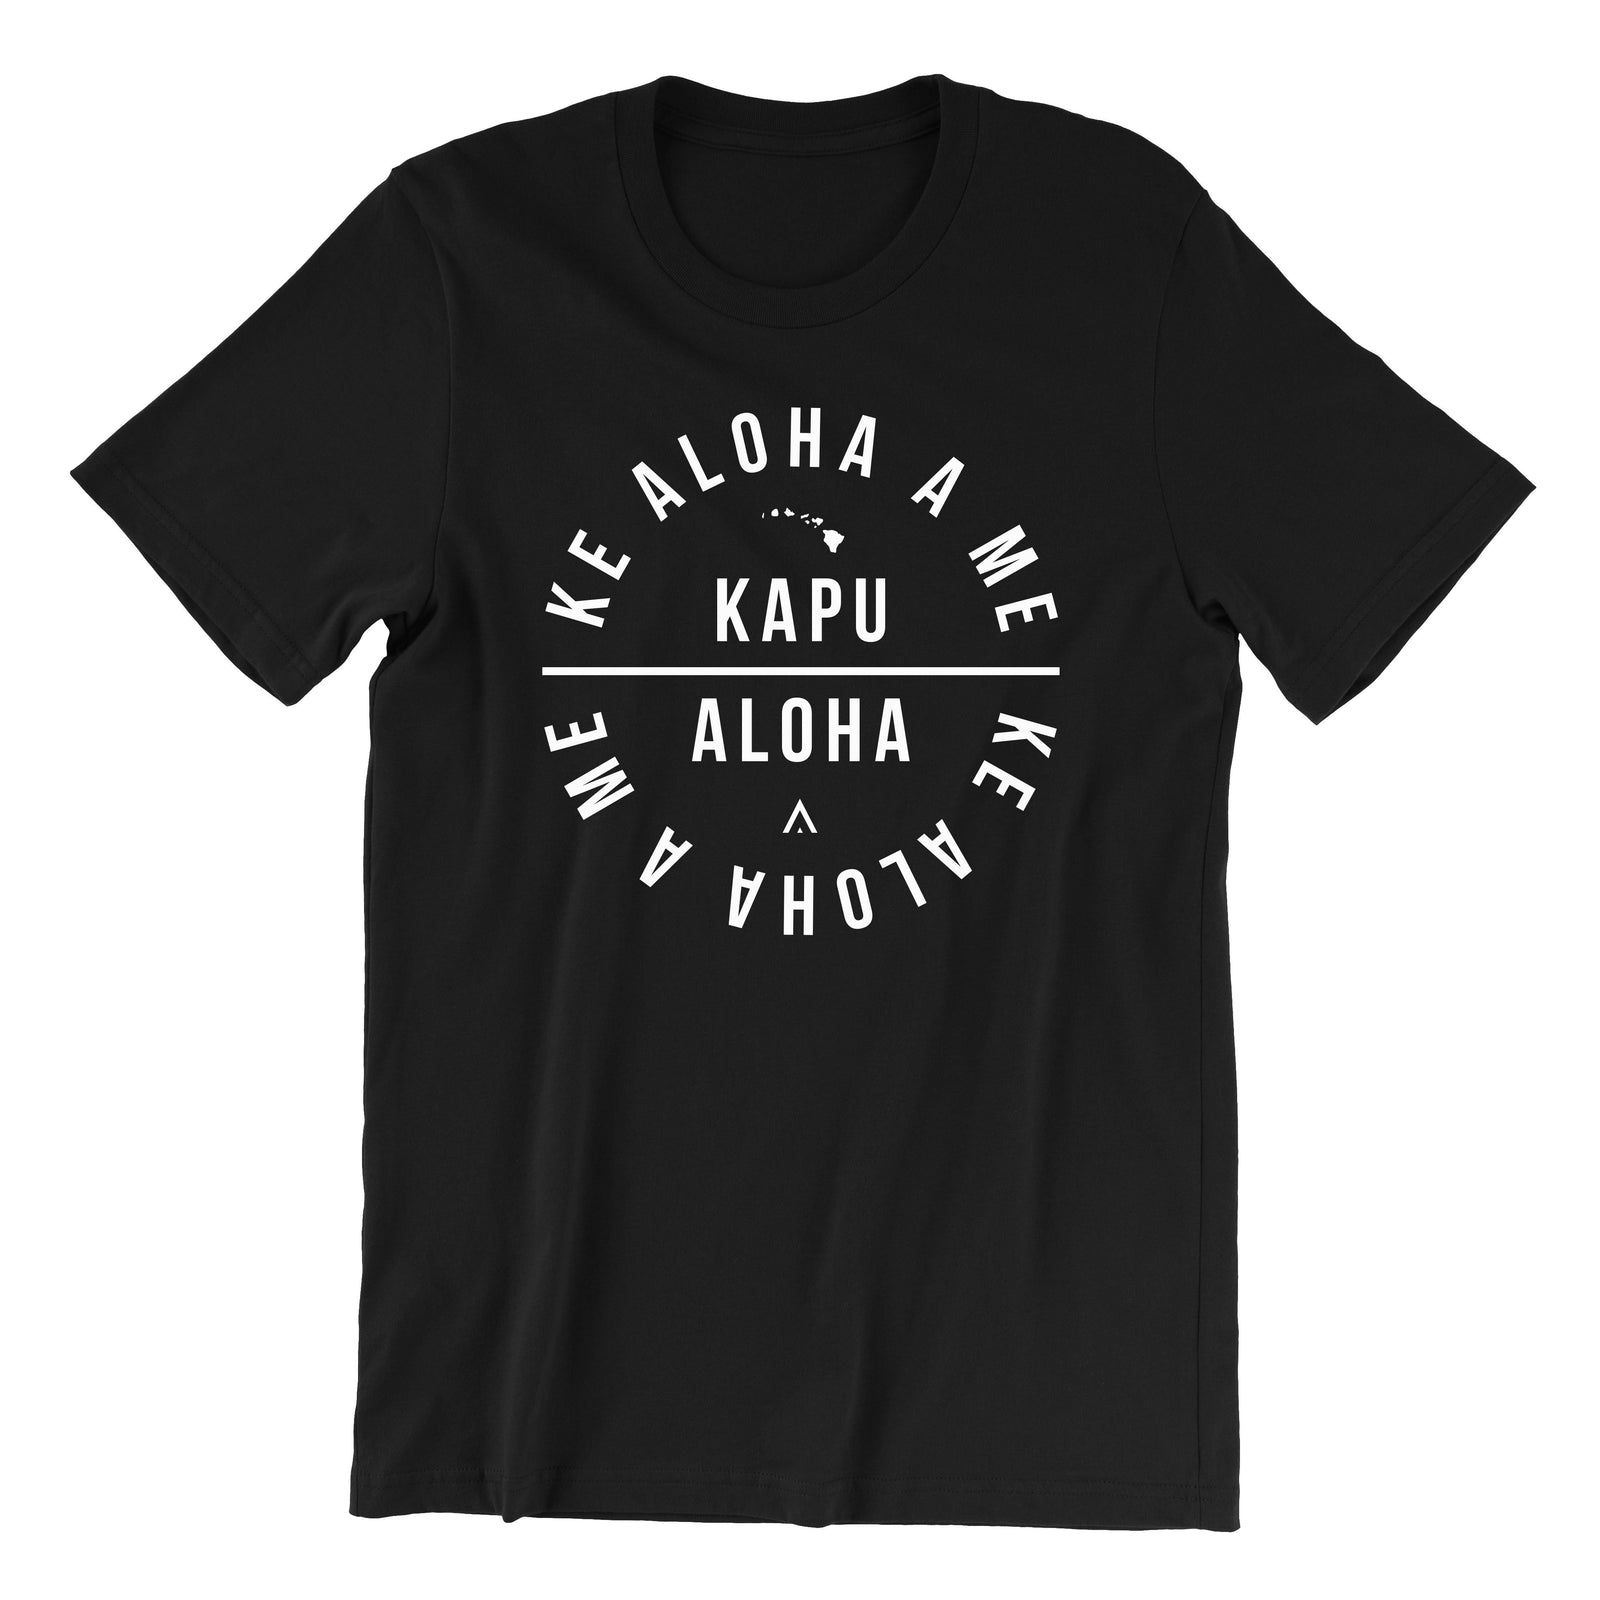 Pop-Up Mākeke - Aloha Ke Akua Clothing - Kapu Aloha Men's Short Sleeve T-Shirt - Black